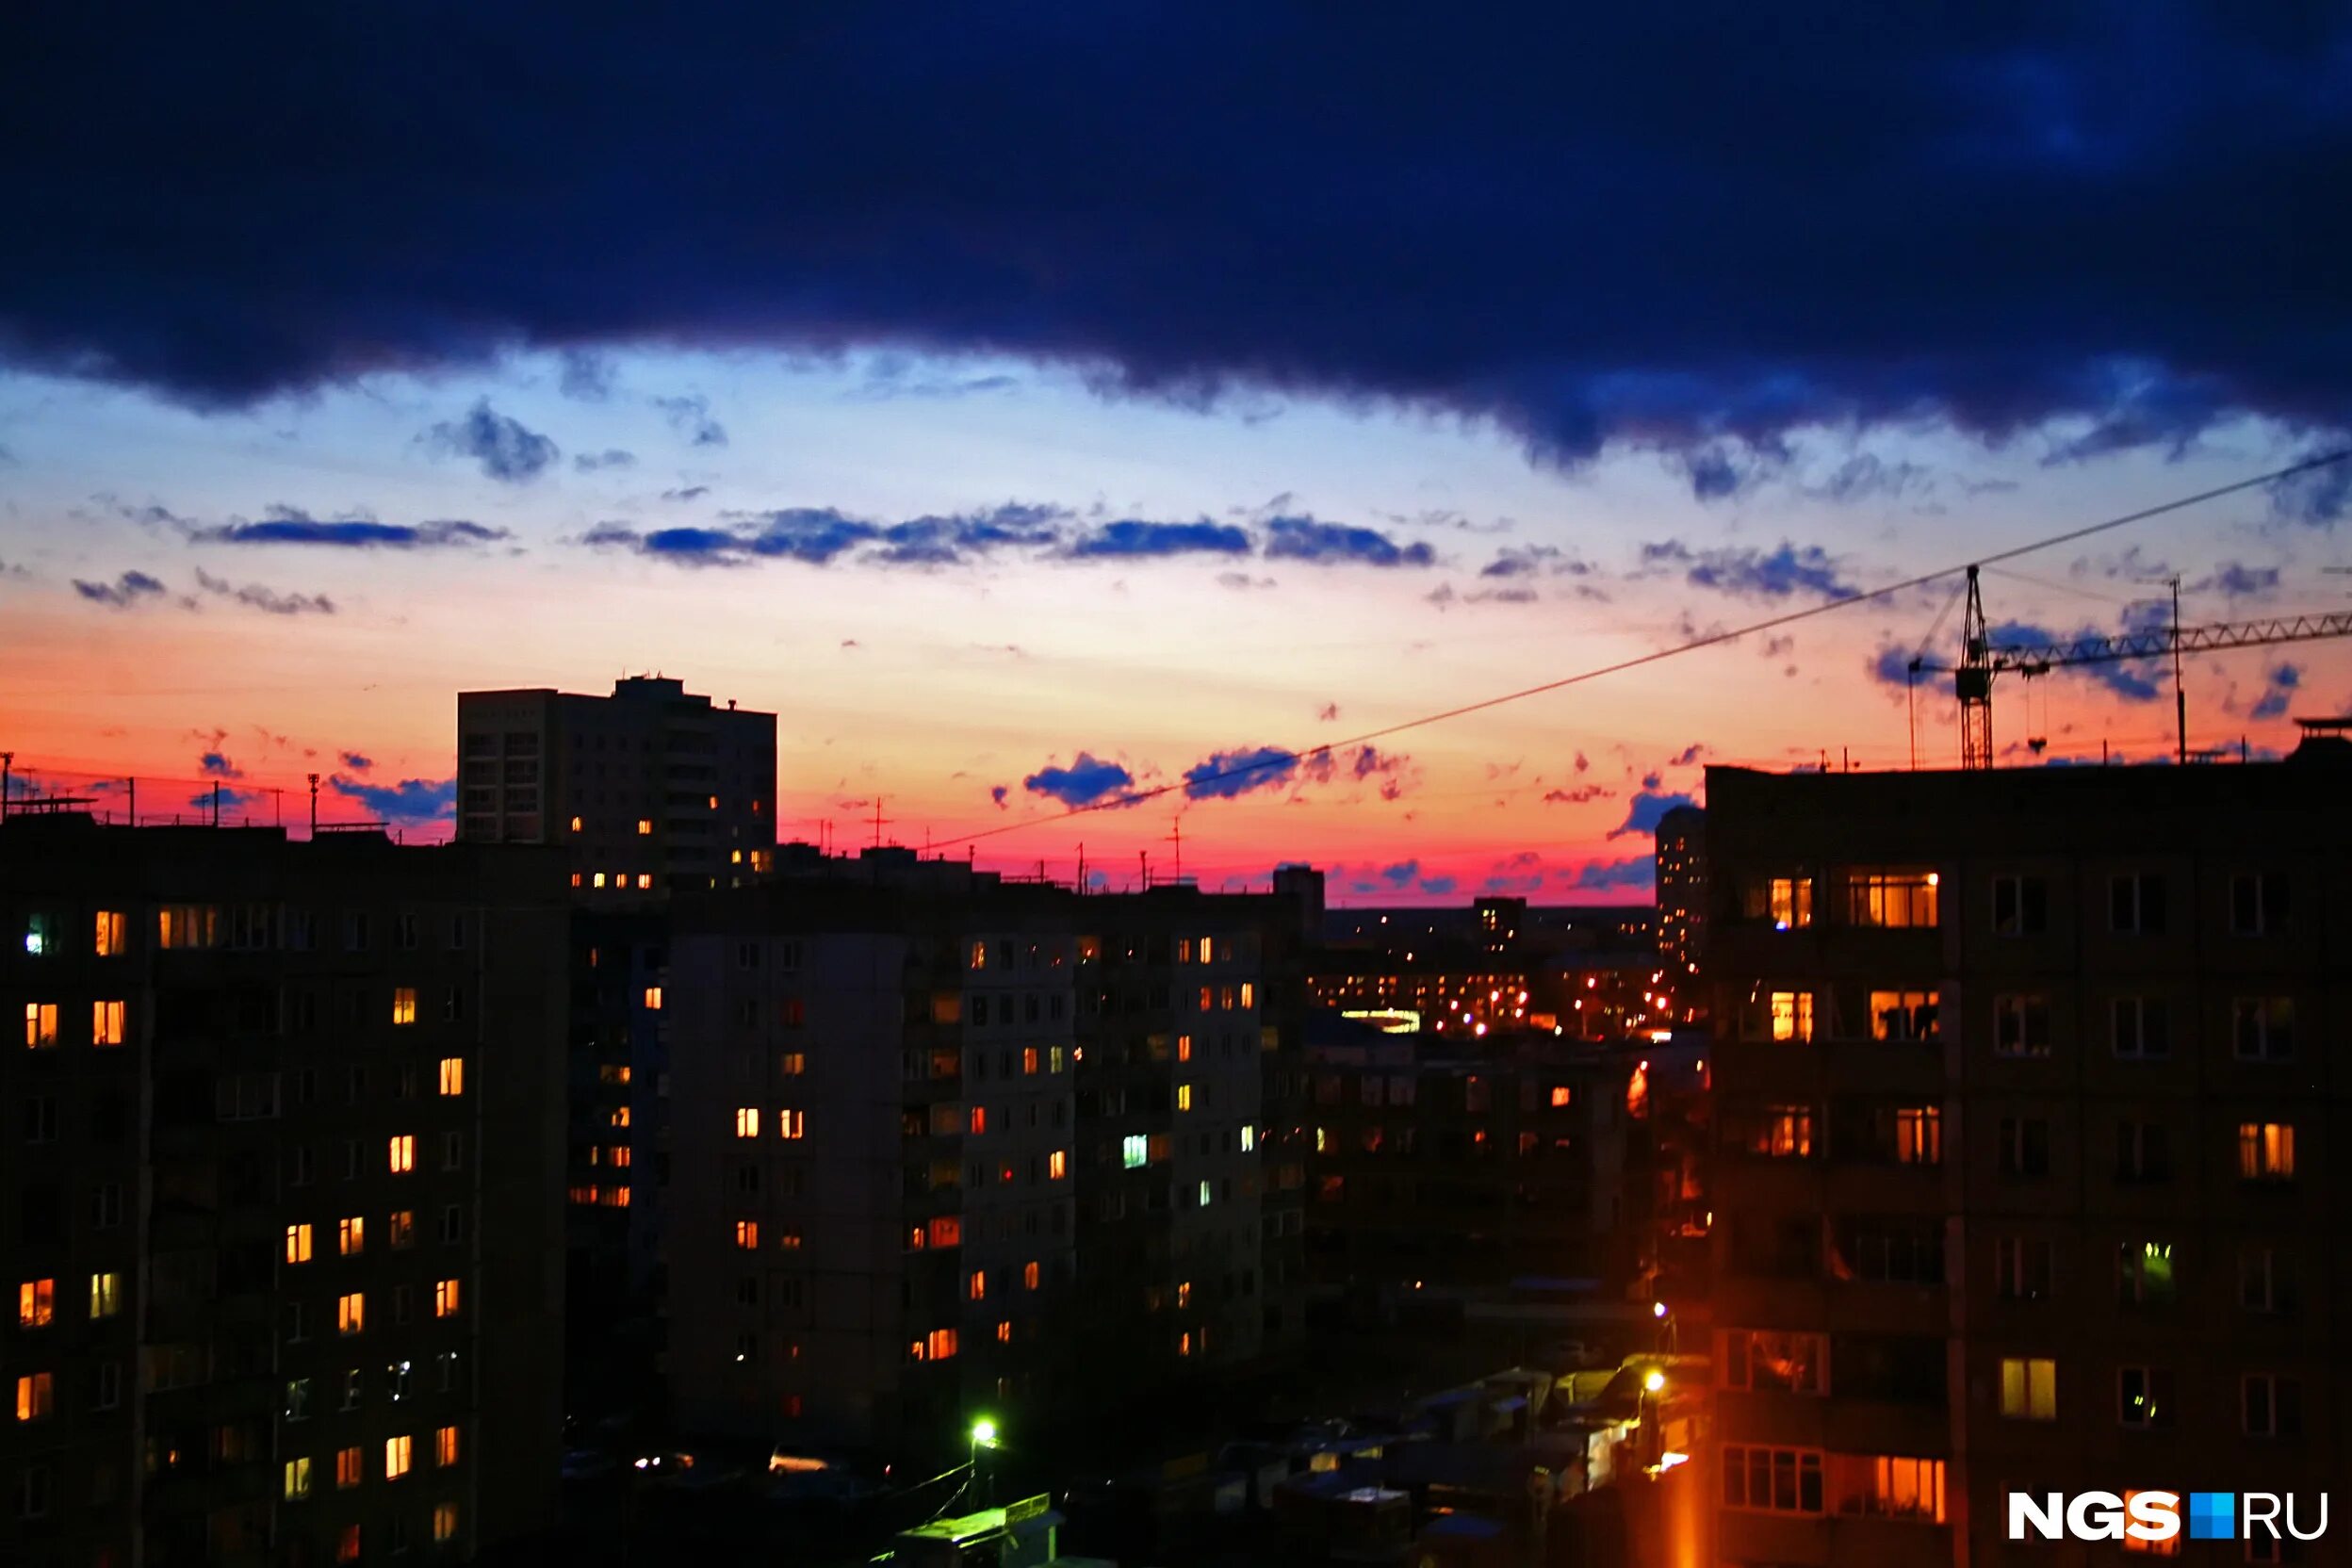 Вечер 12 12 19. Новосибирск вечером. Новосибирск ночью из окна многоэтажки. Вечерняя Первомайка Новосибирск. Новосибирск вечером фото.